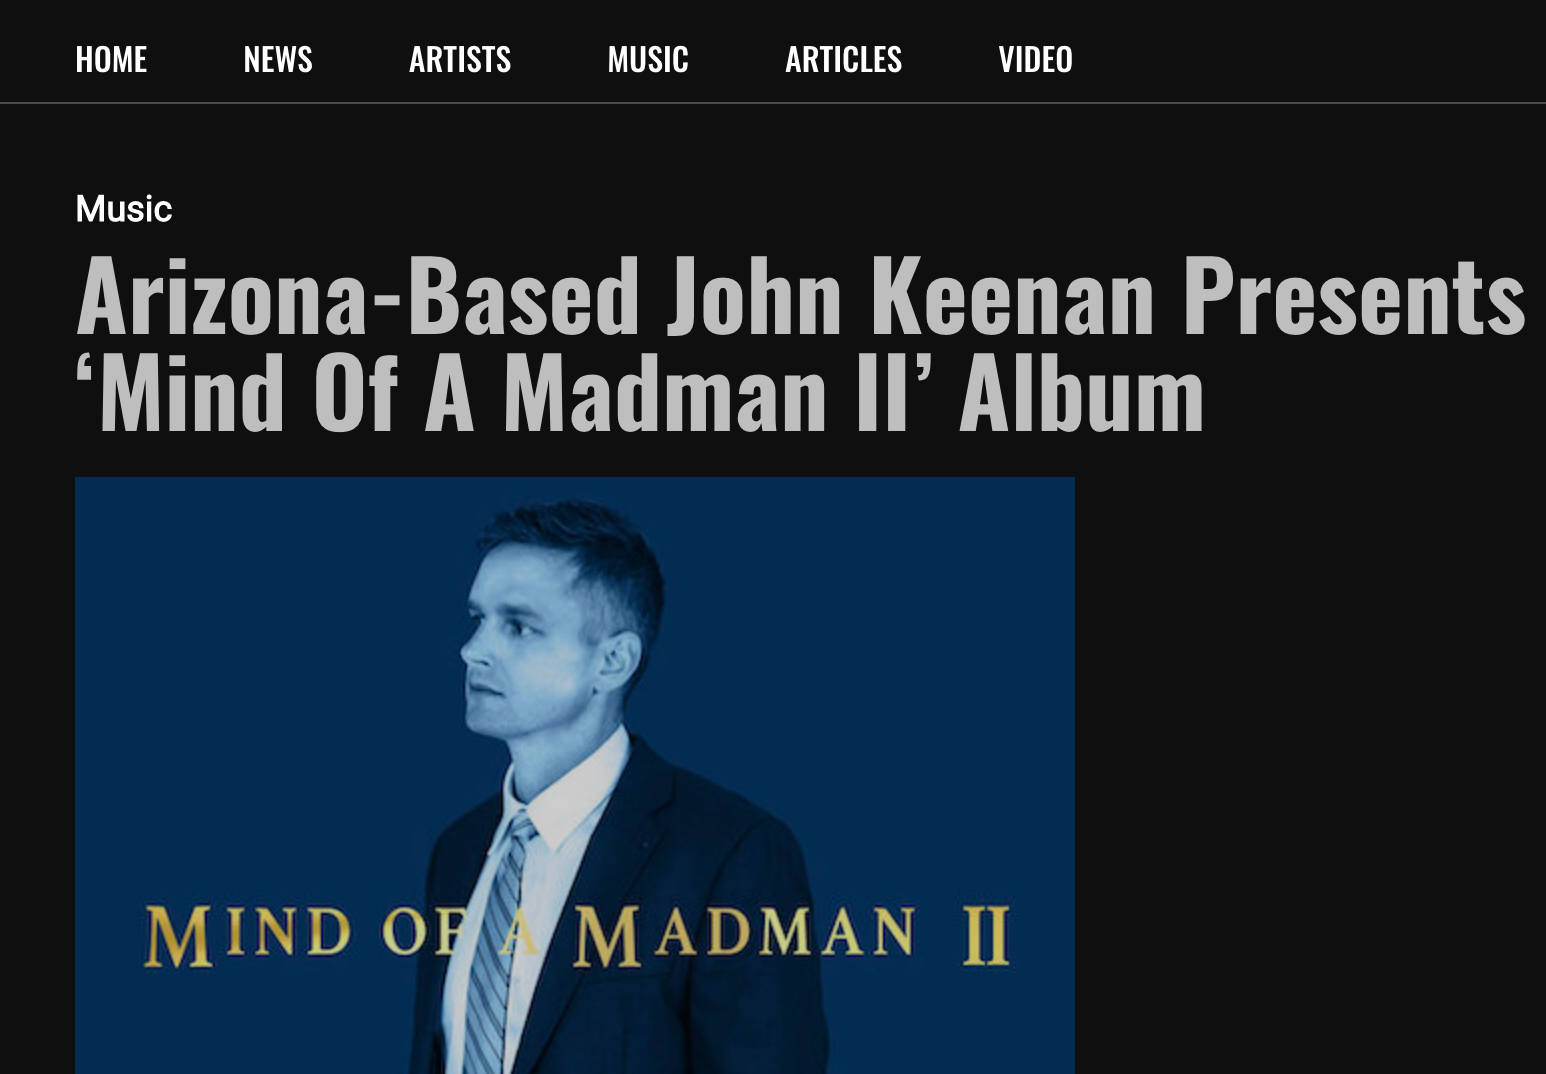 https://www.chunedesk.com/arizona-based-john-keenan-presents-mind-of-a-madman-ii-album/